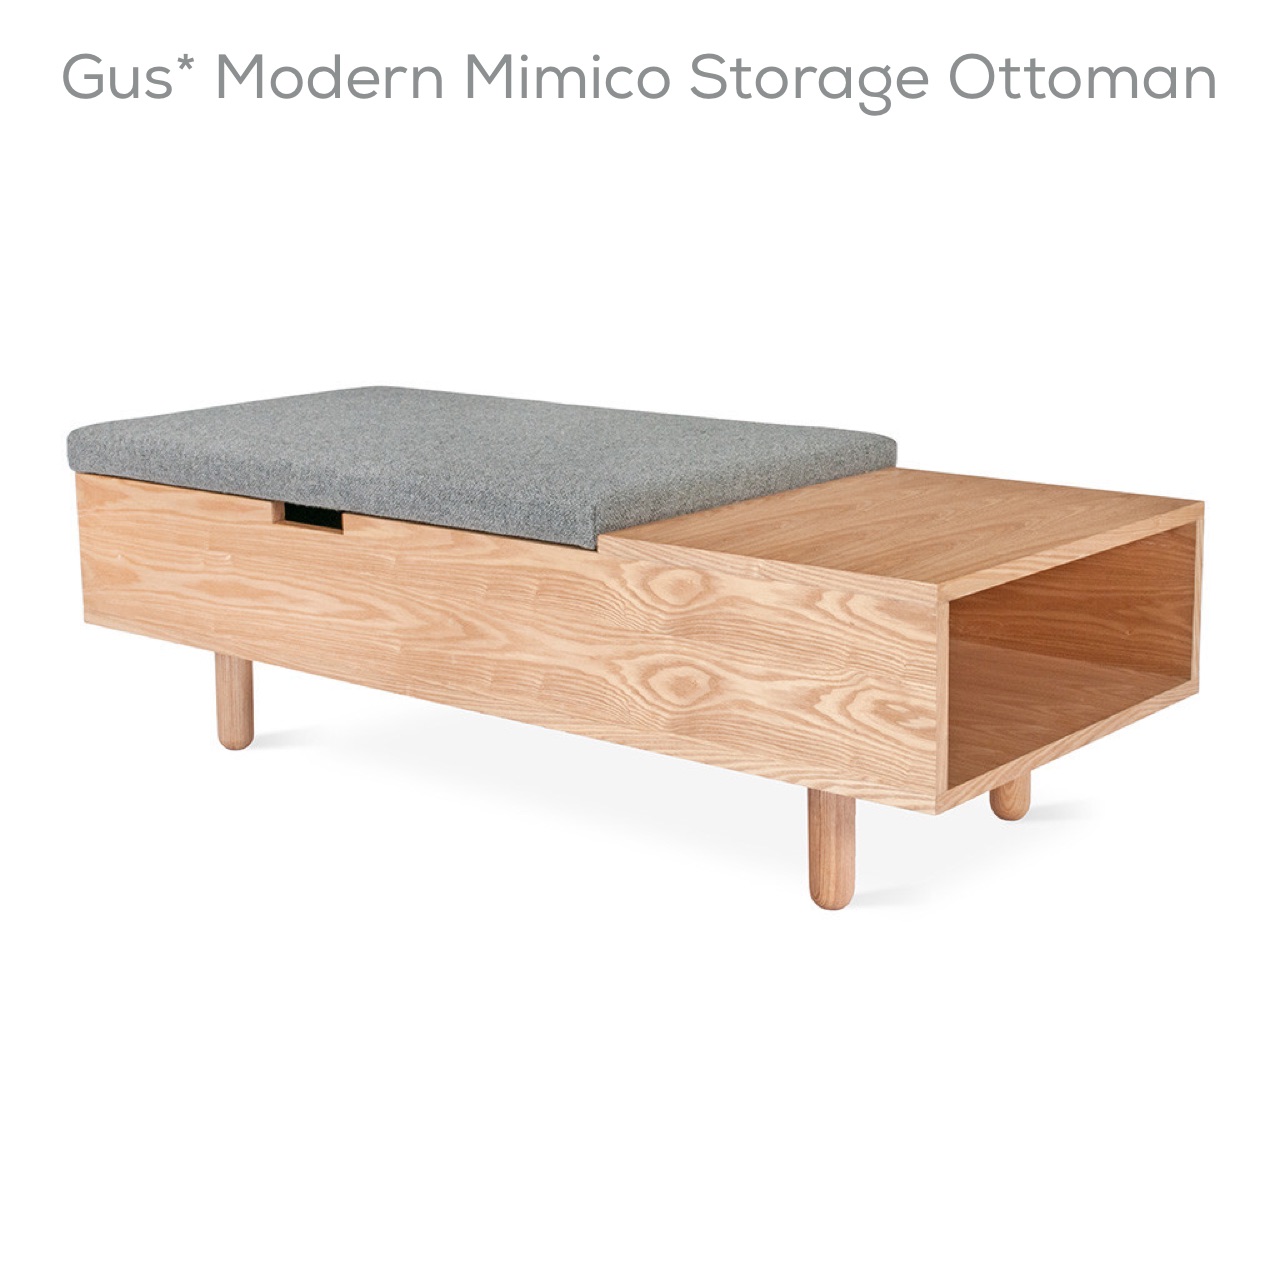 Gus Modern Mimico Storage Ottoman